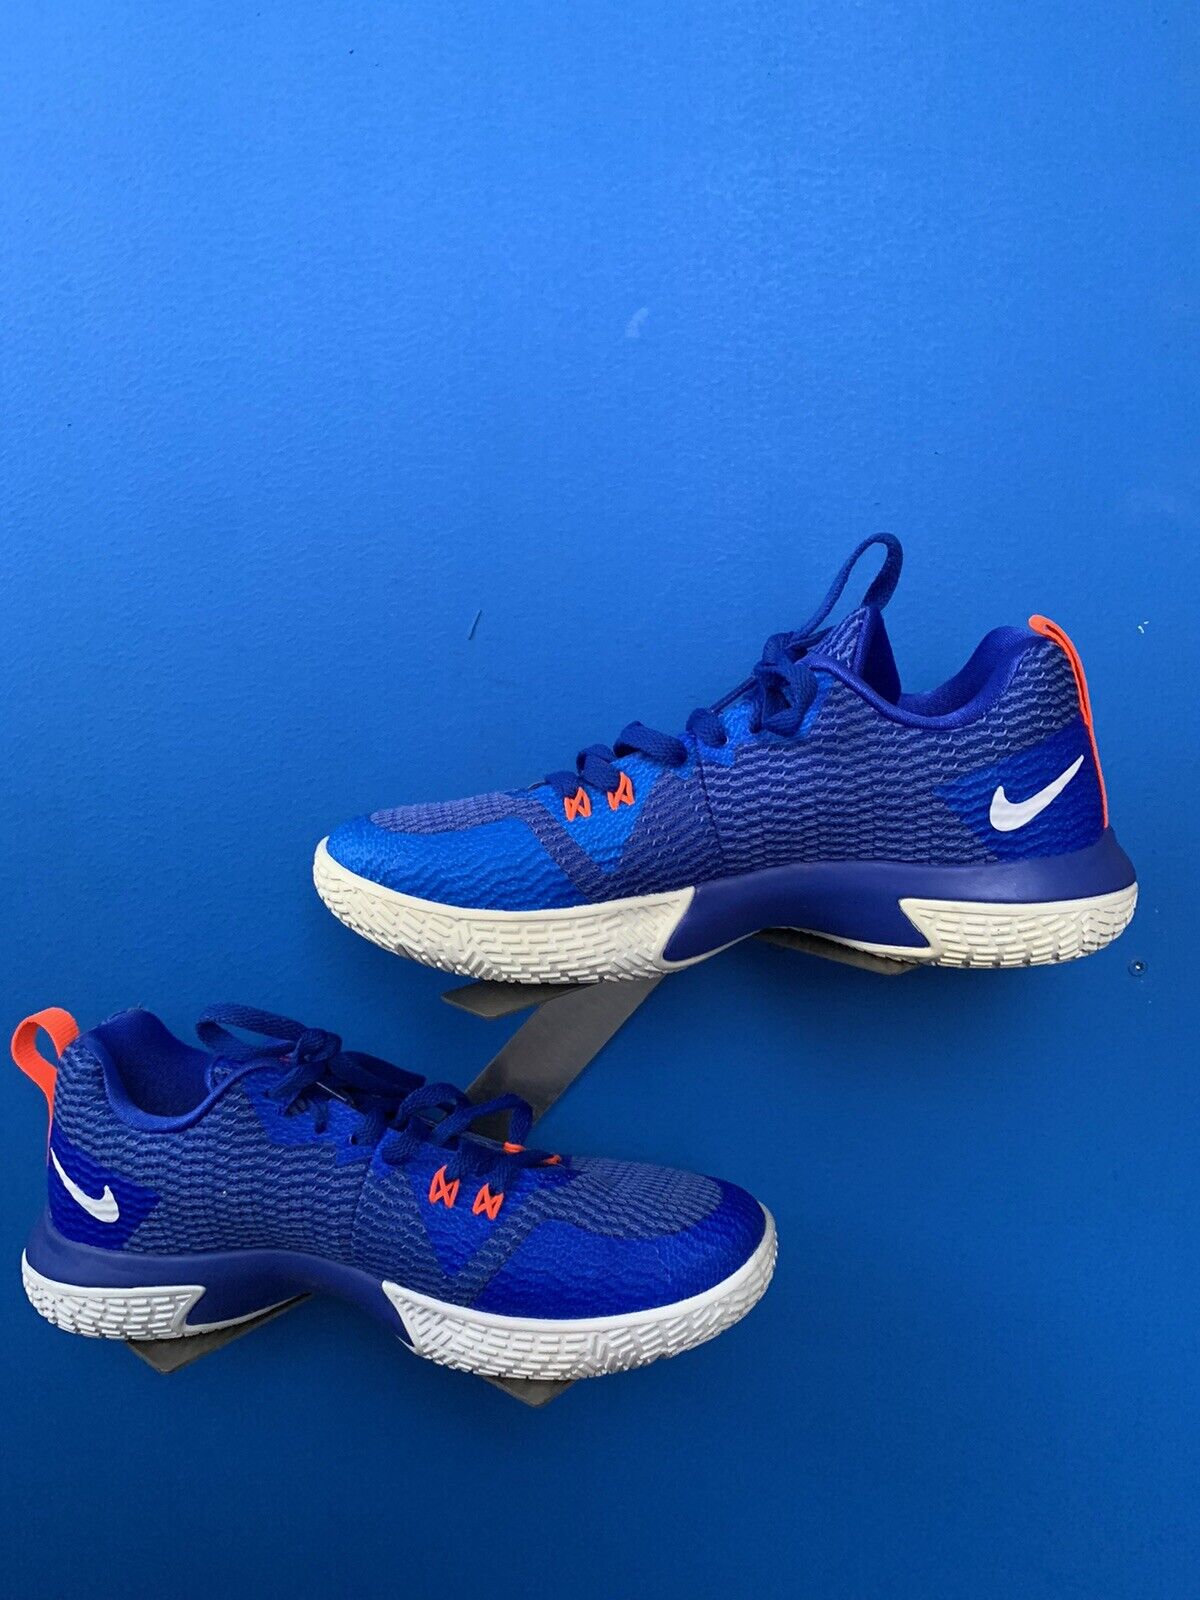 Nike Zoom Live II Men Basketball Shoes Low Blue AH7566-400 Size 8 eBay